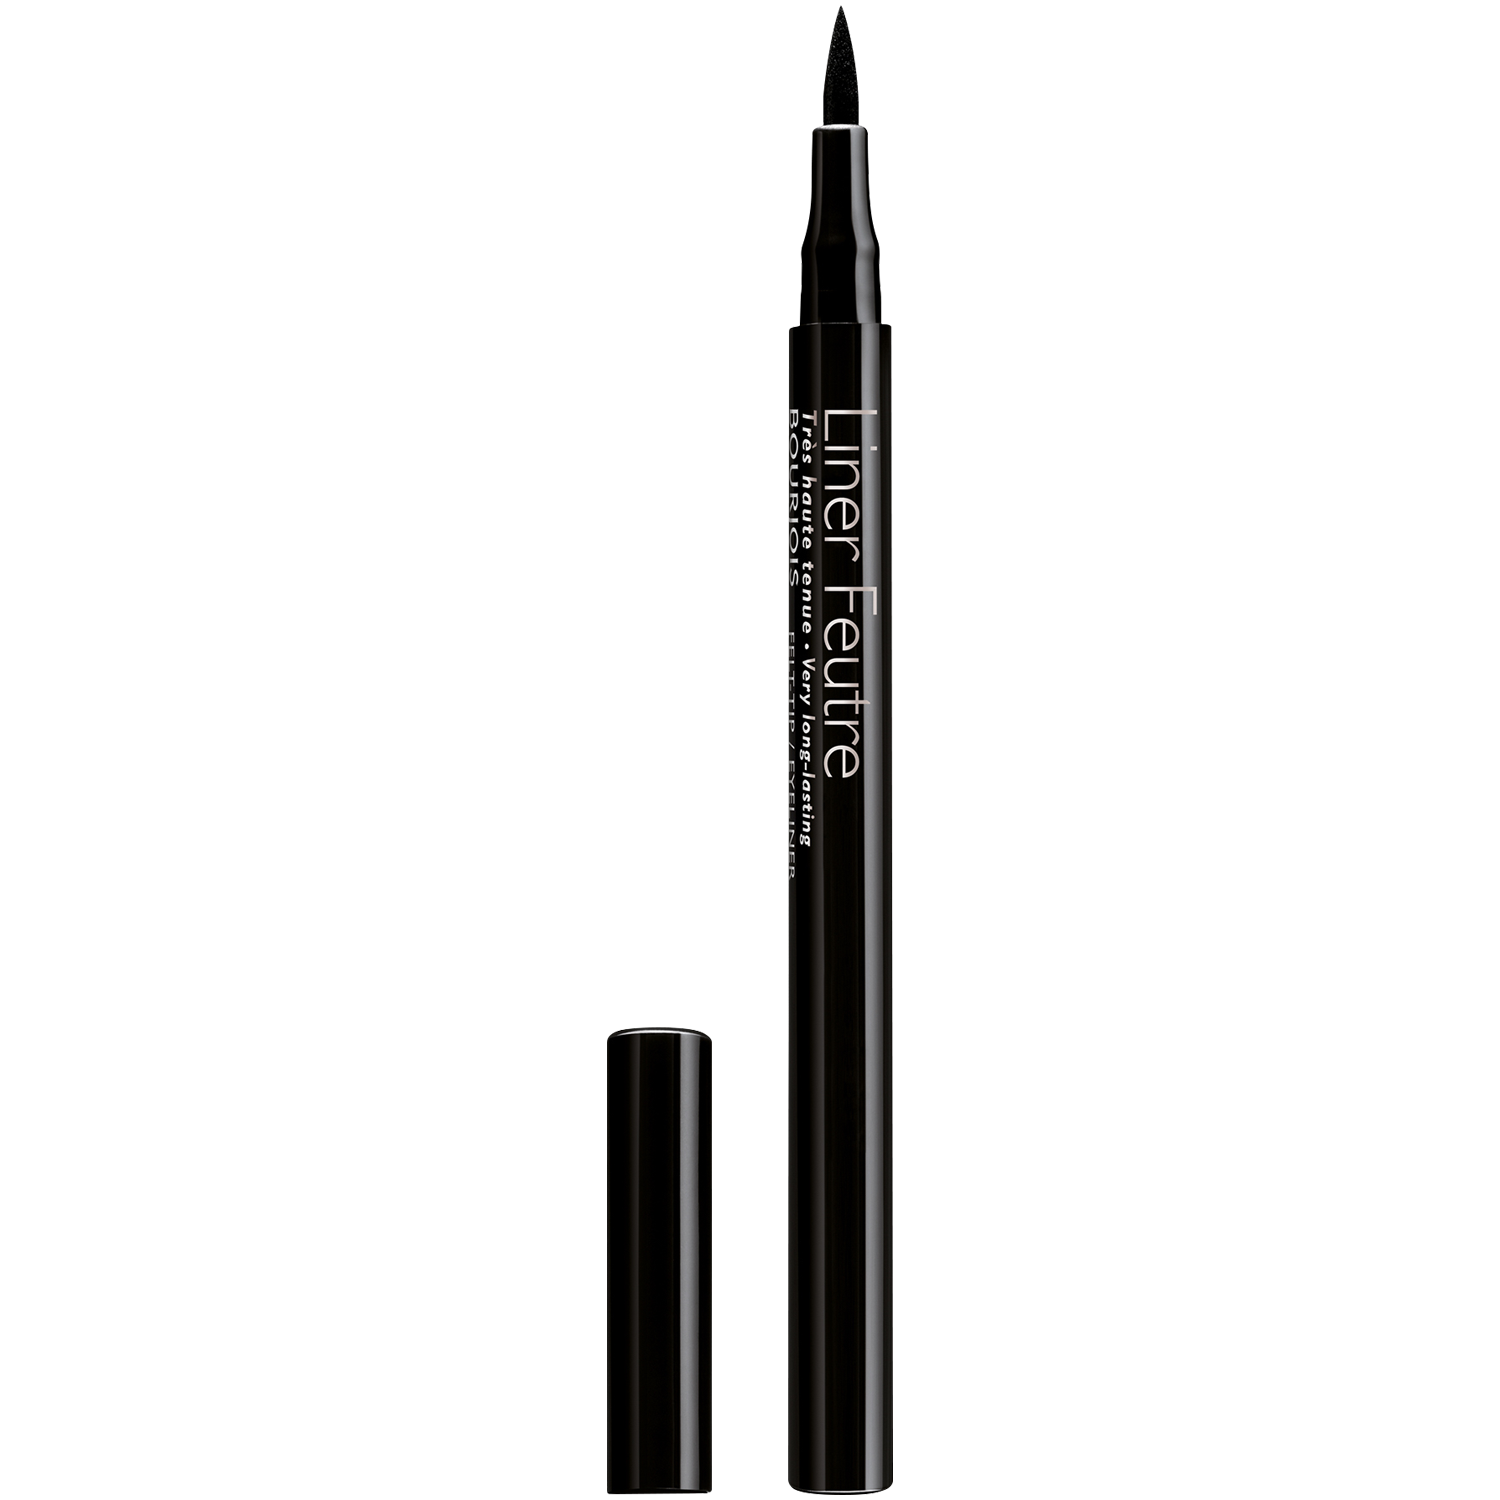 Bourjois Liner Feutre карандаш-подводка для глаз 11 noir, 0,8 мл